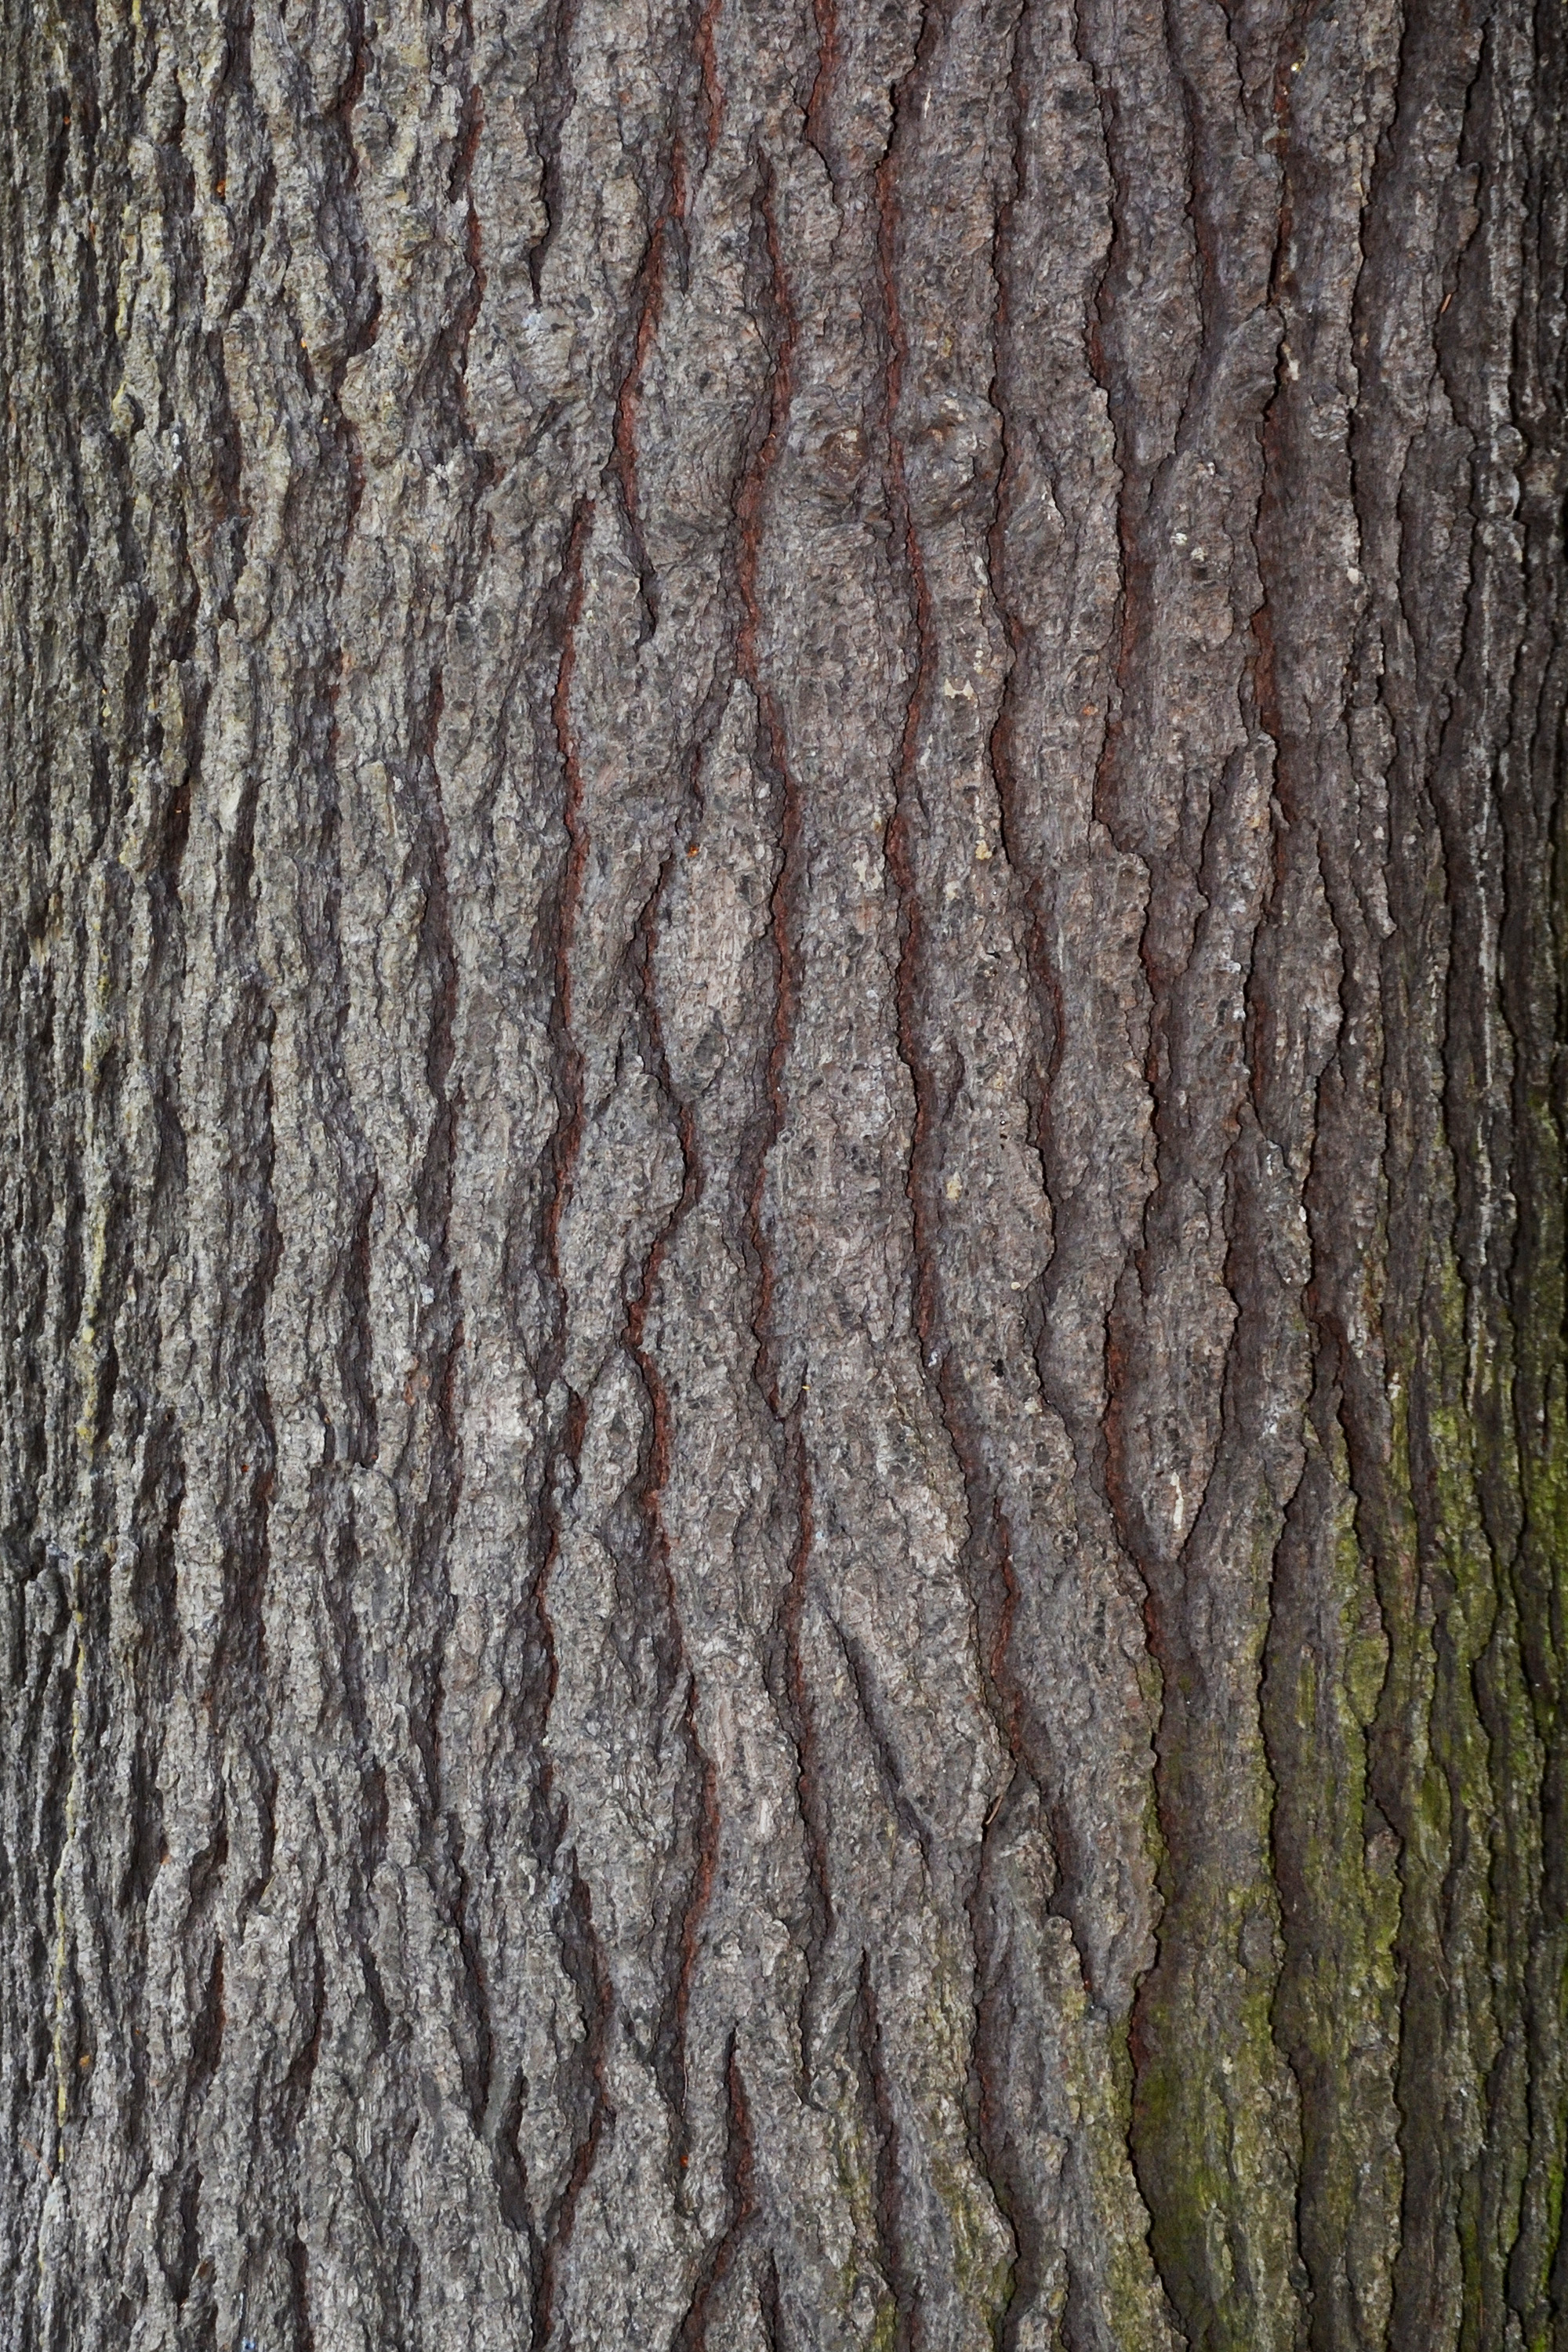 Bark of eastern white pine photo